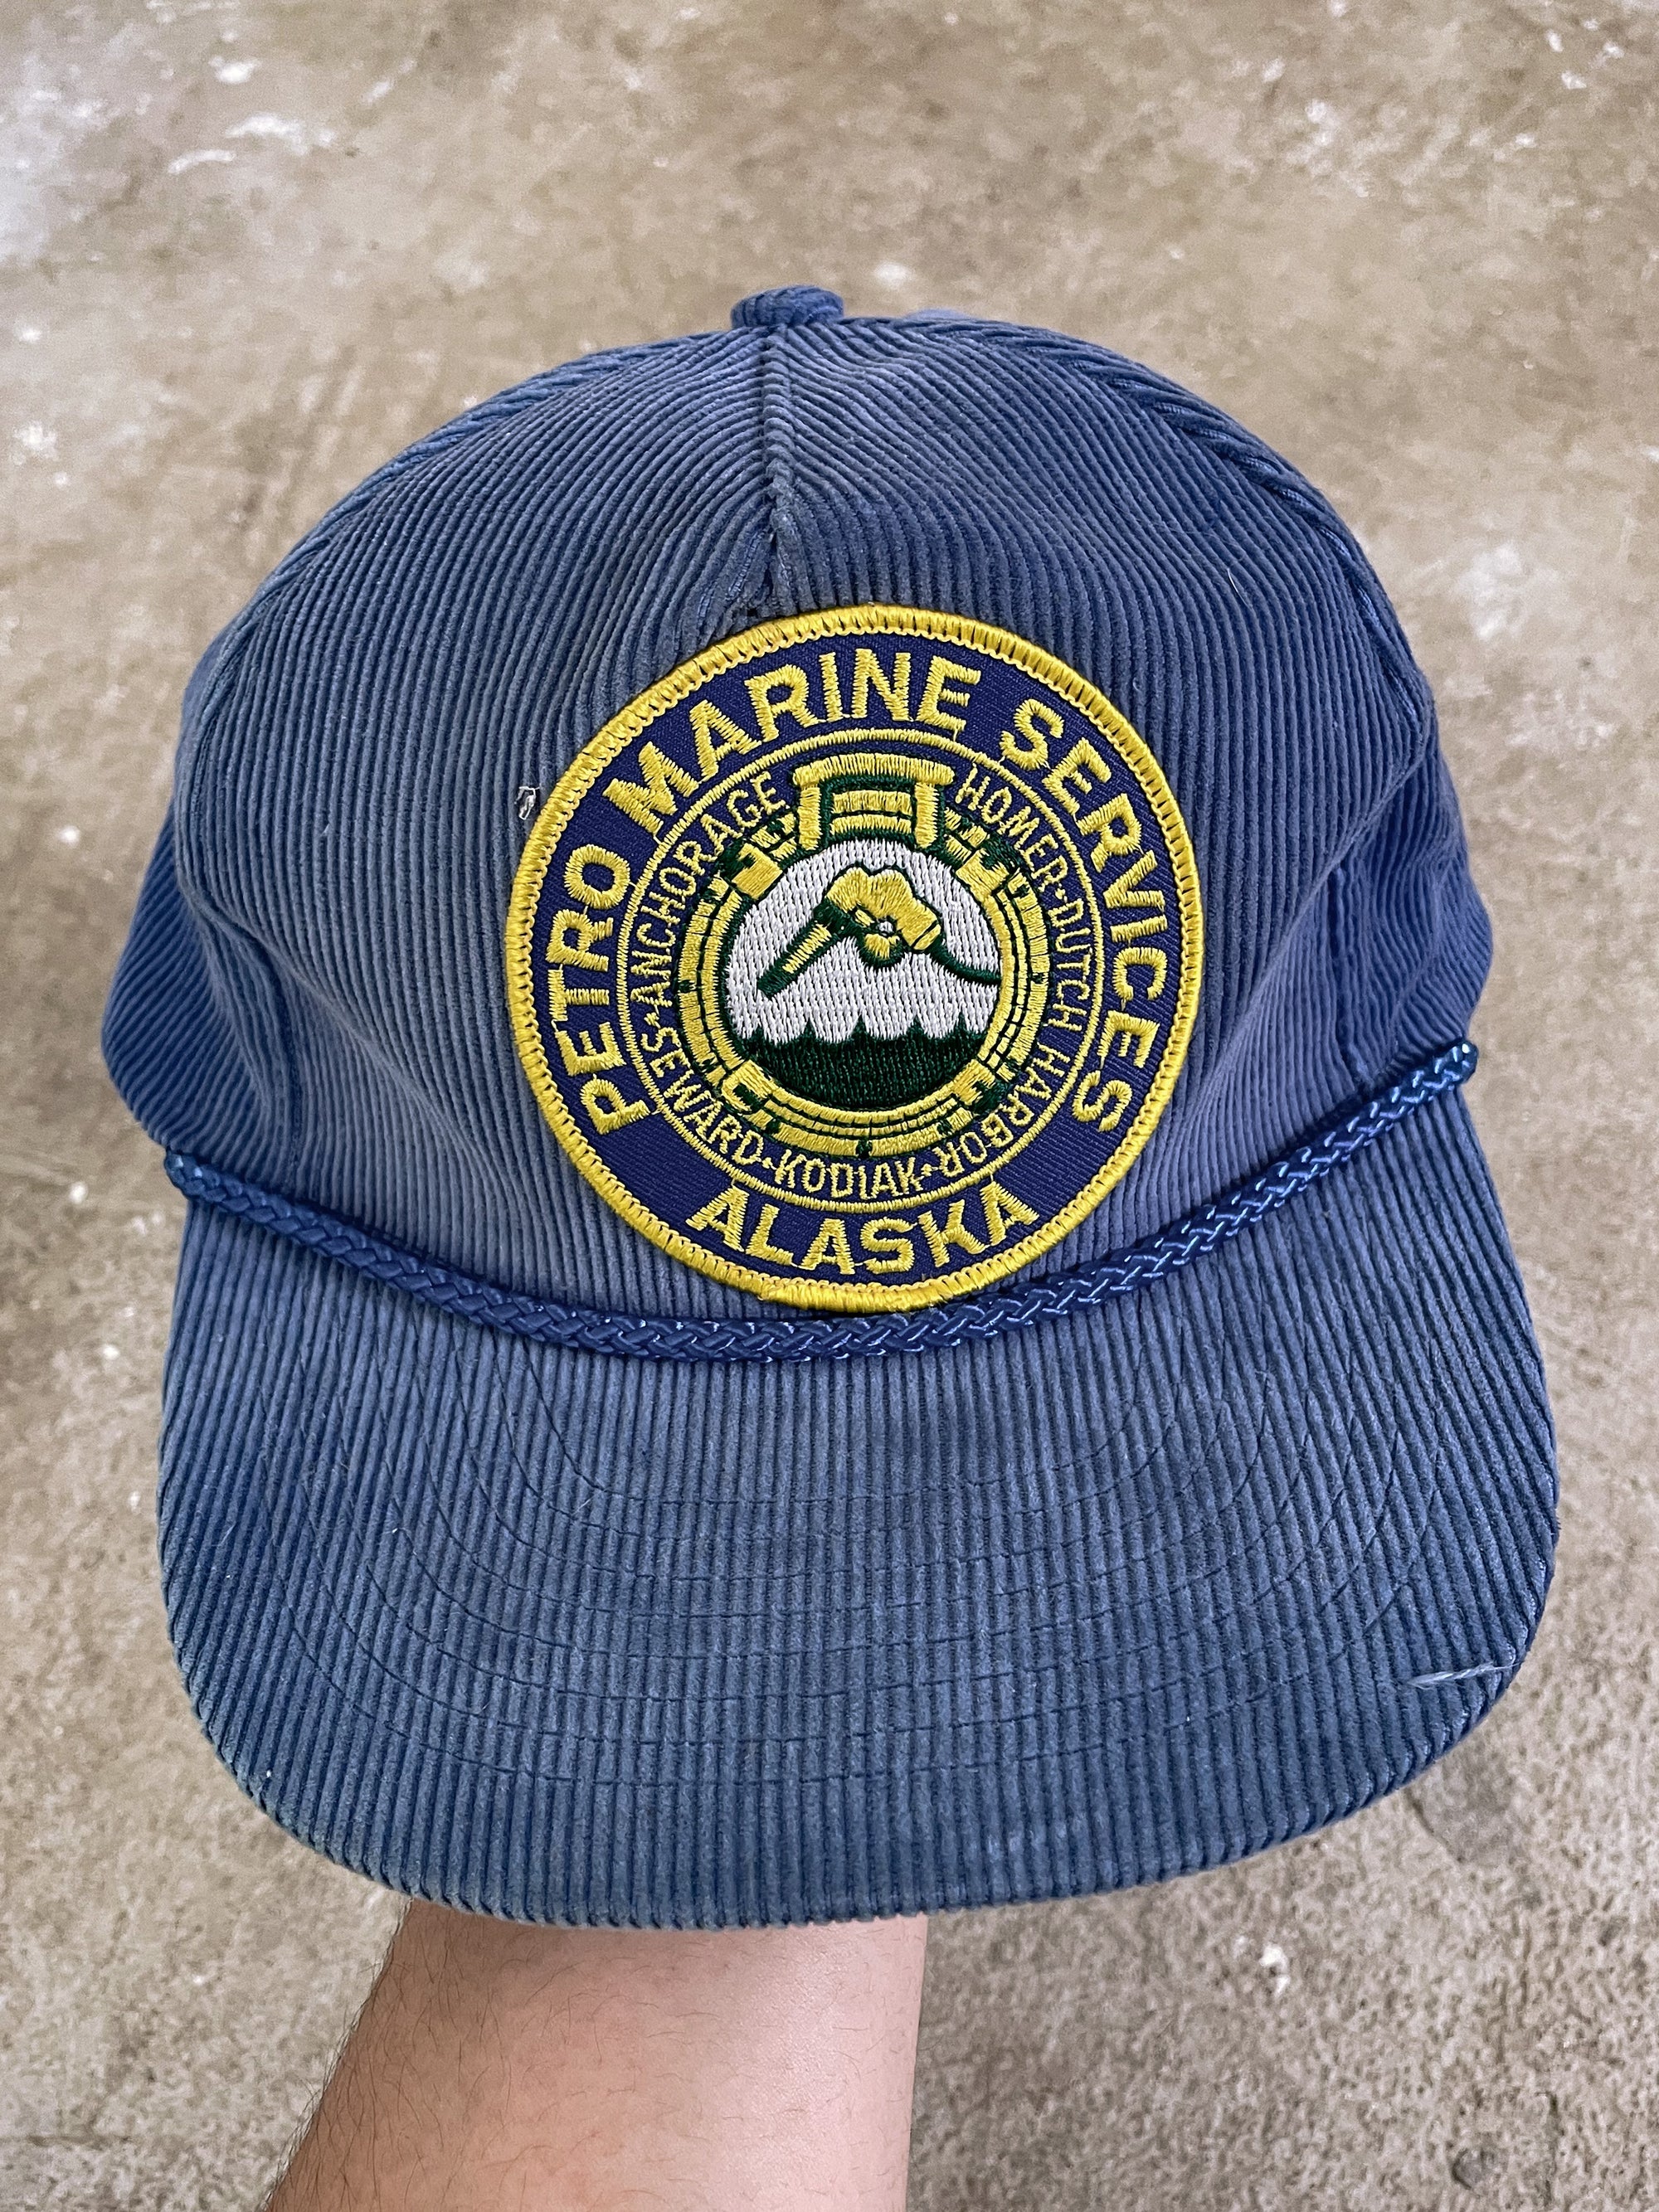 1980s “Marine Services Alaska” Faded Corduroy Trucker Hat